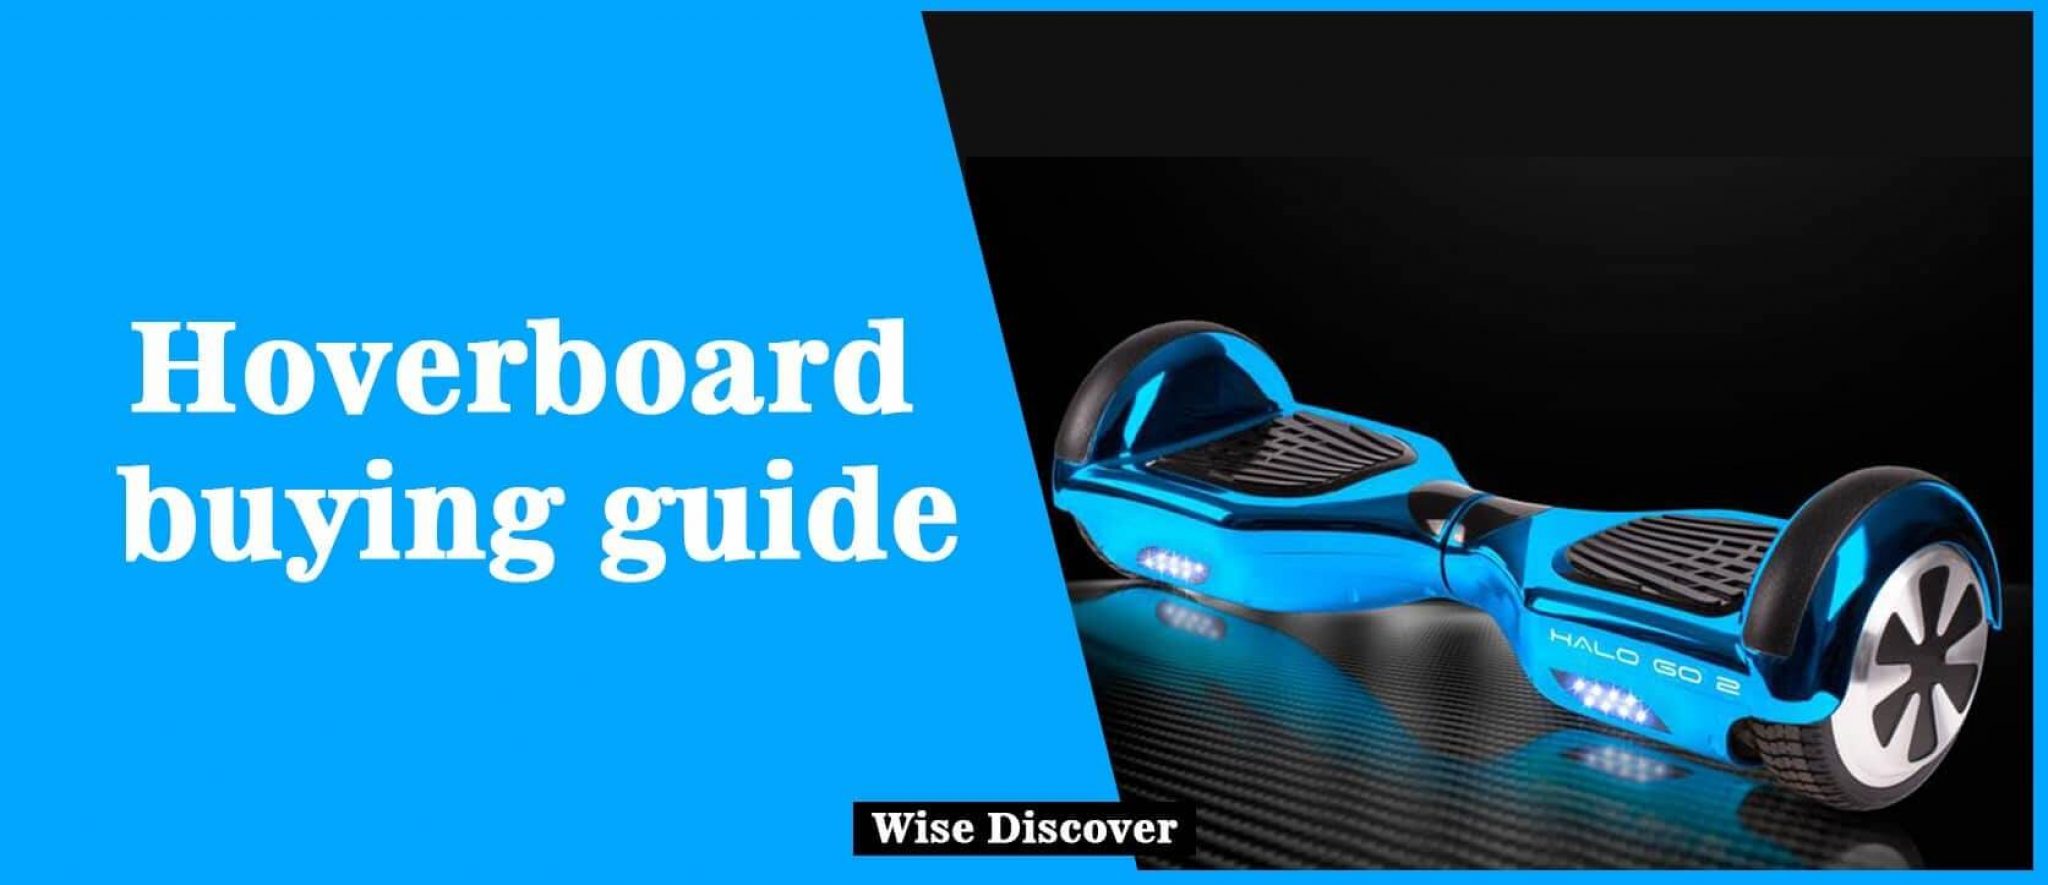 astroboard brand hoverboard